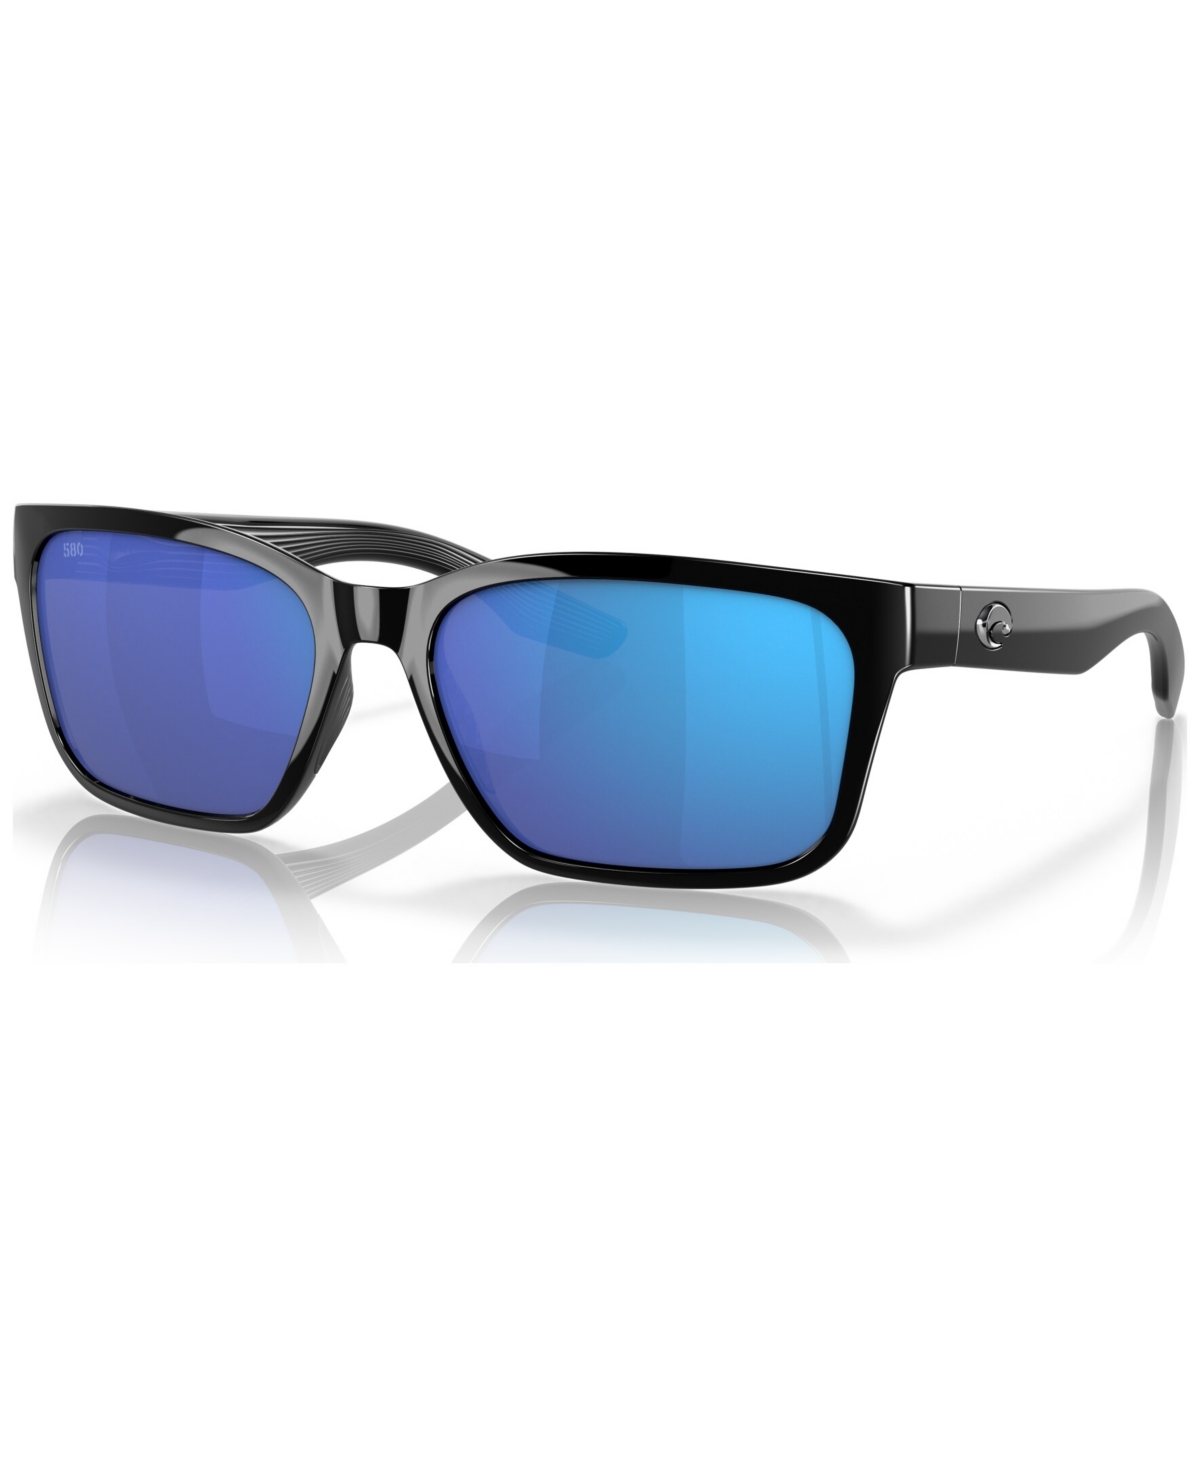 Women's Polarized Sunglasses, 6S908157-zp - Black